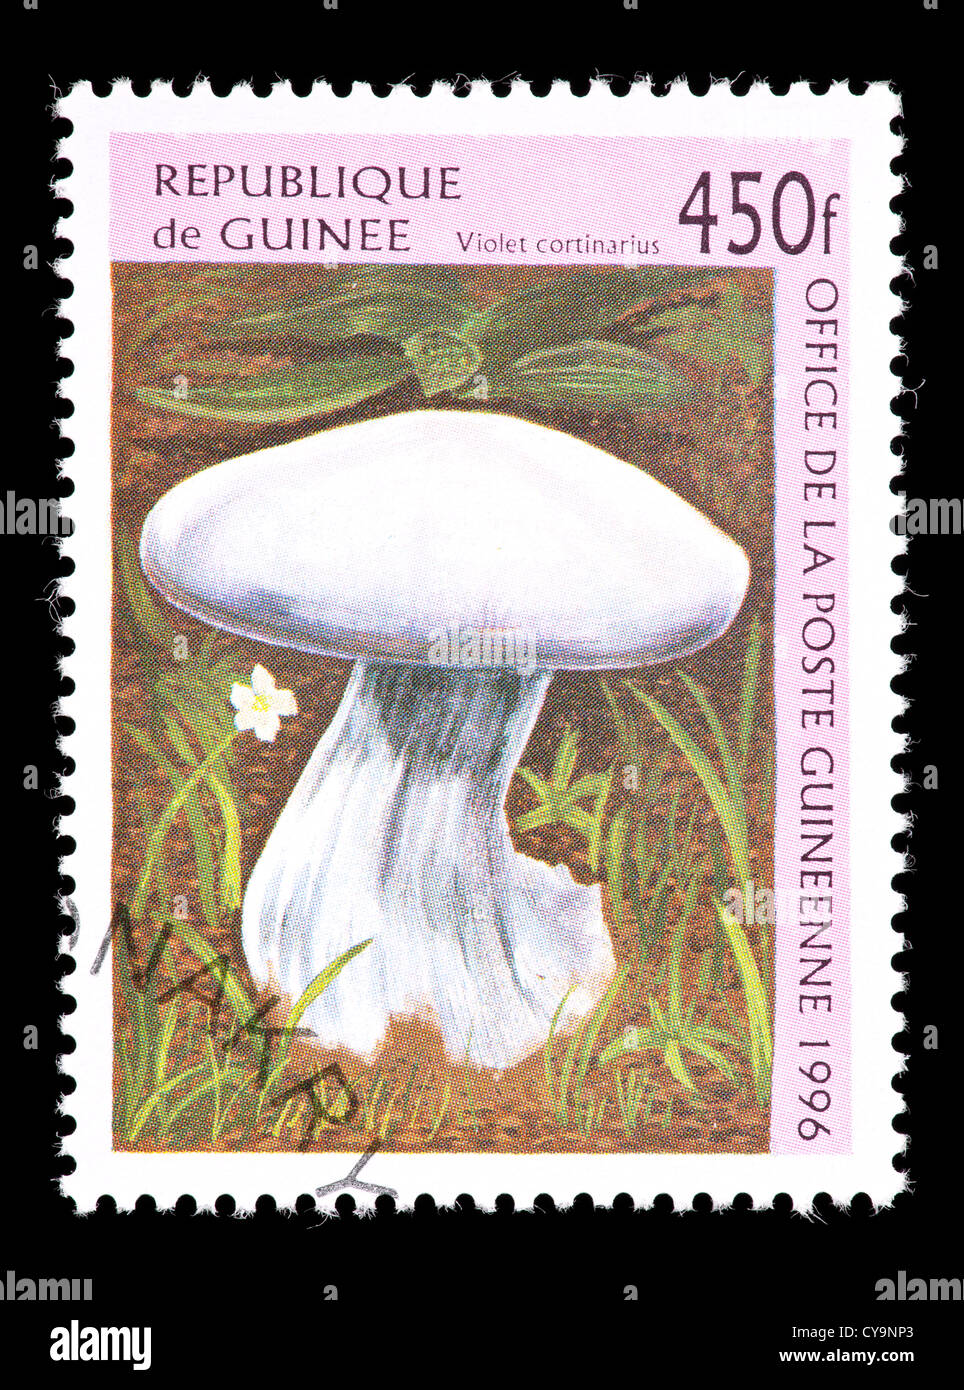 Postage stamp from Guinea depicting Violet cortinarius mushroom. Stock Photo